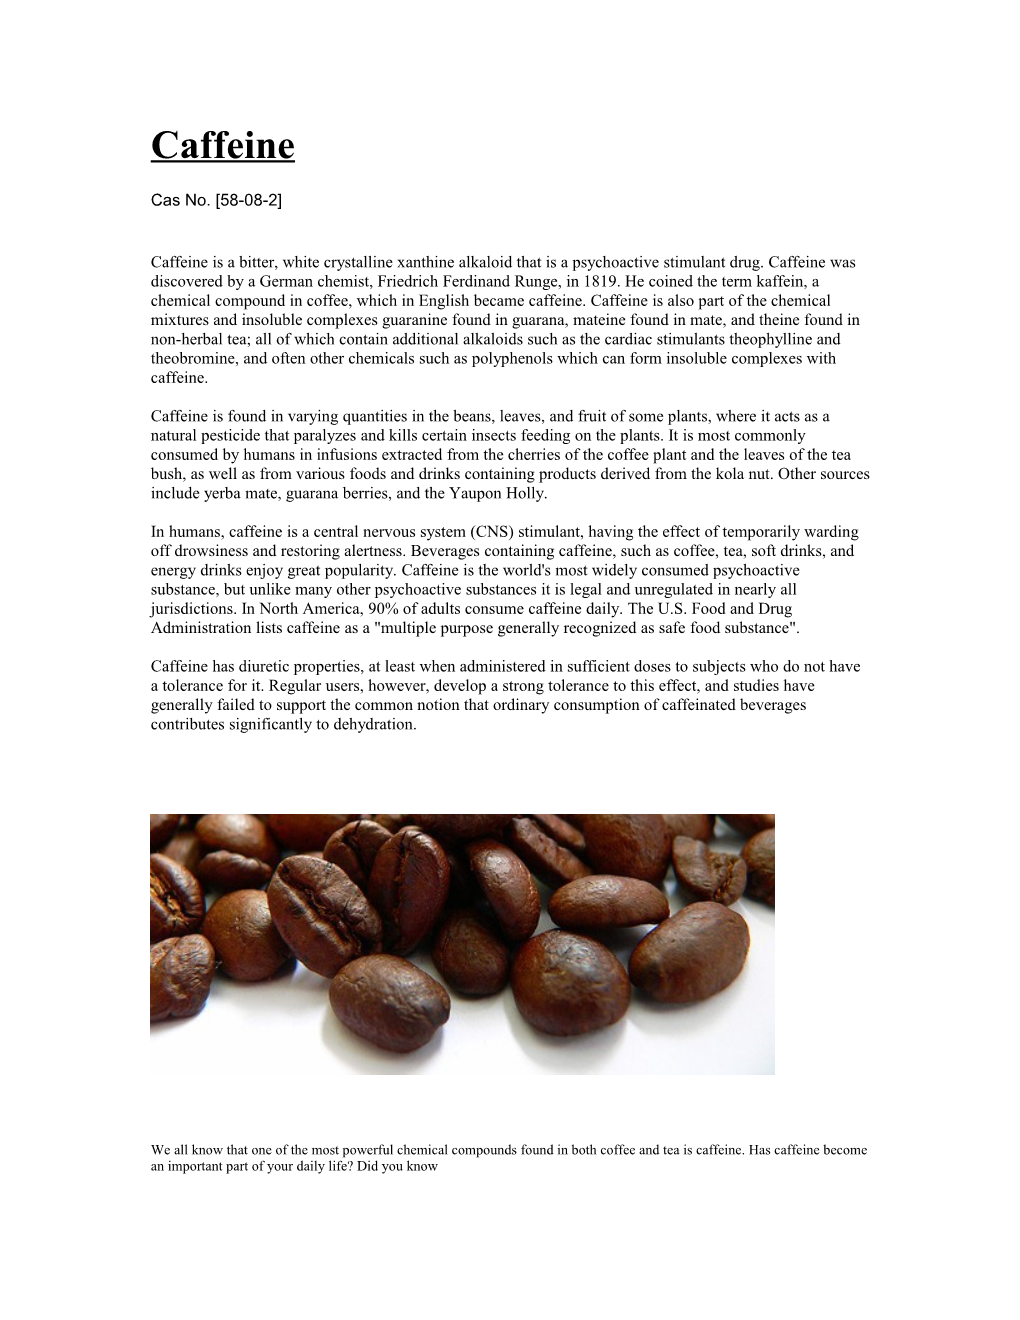 Caffeine BP/USP 58-08-2